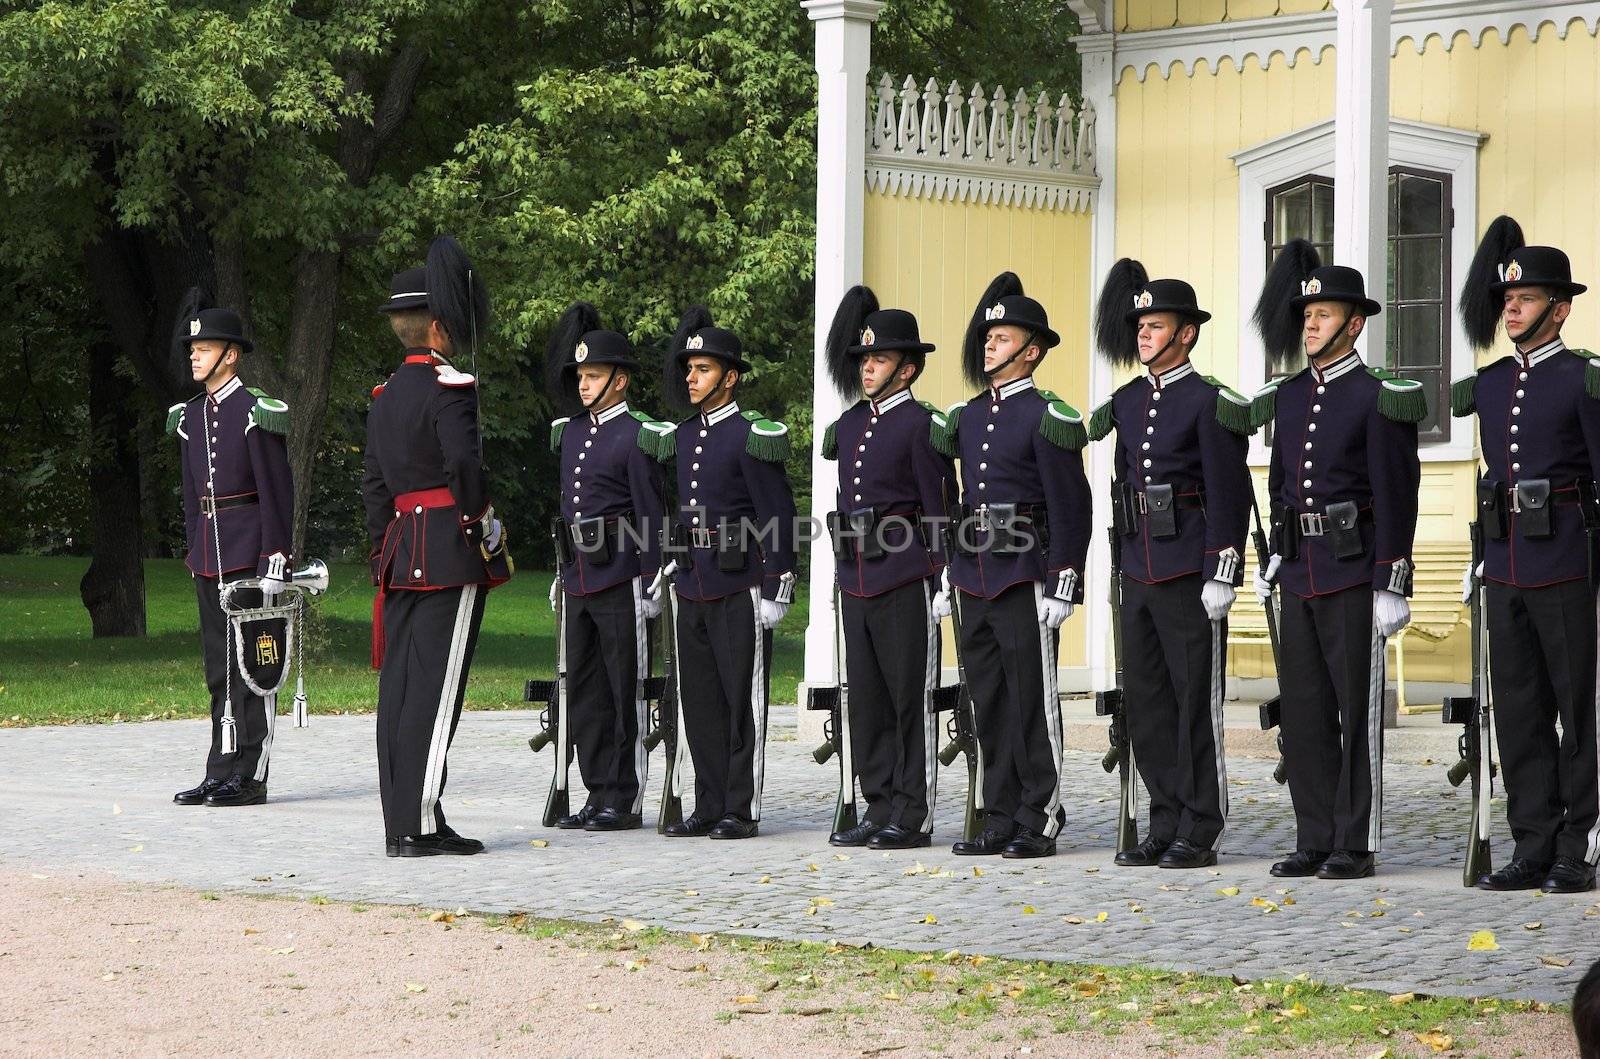 Royal Norwegian Guard by Espevalen